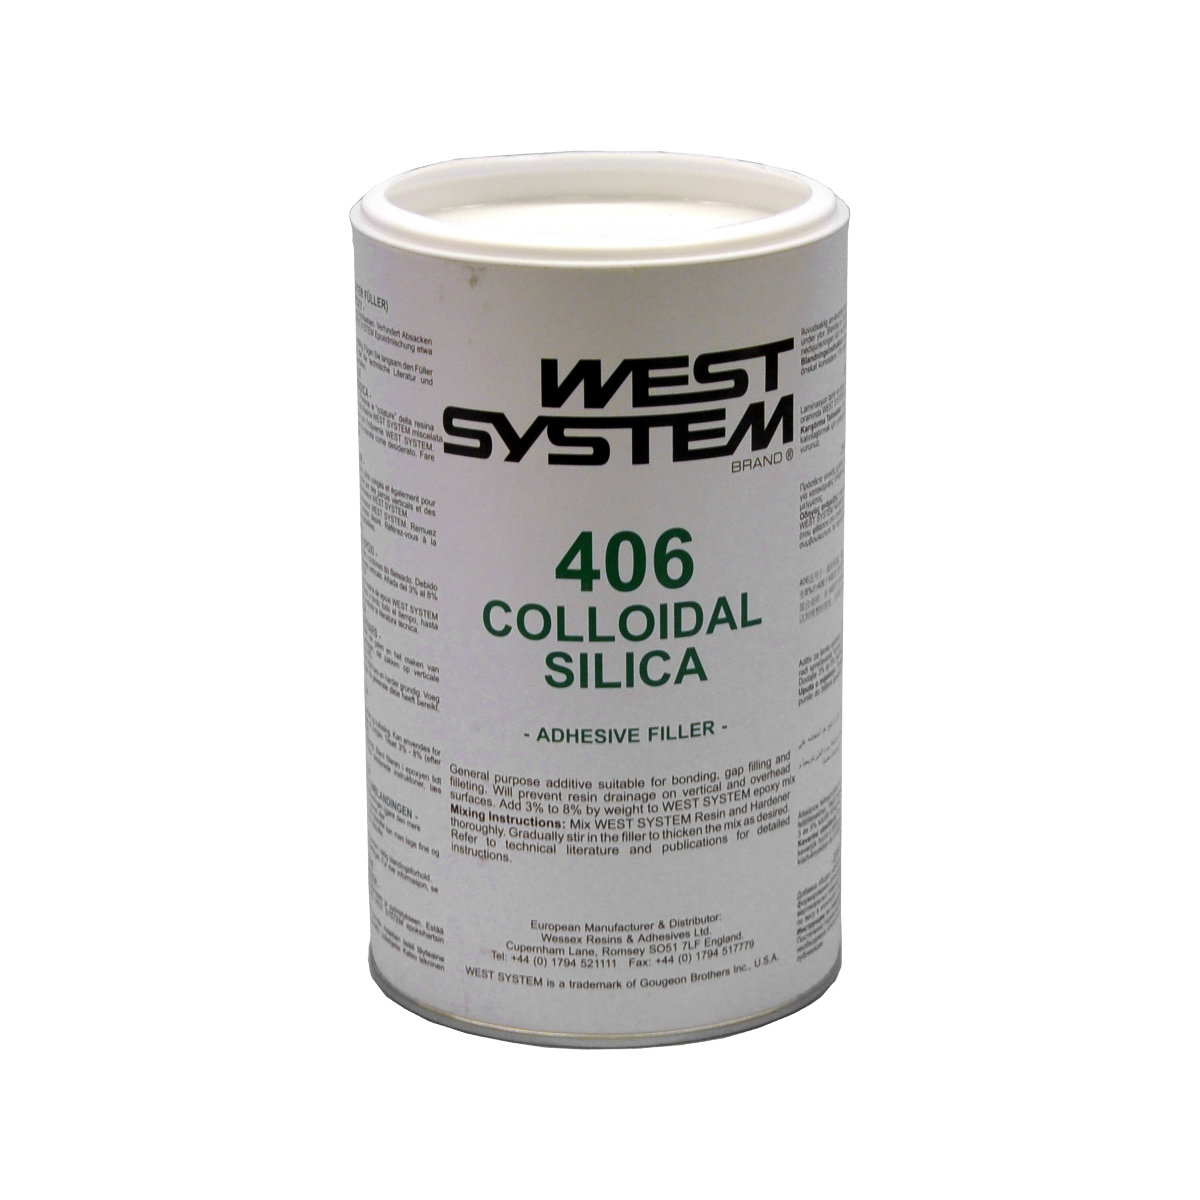 West System Colloïdaal Silica Epoxy Filler 406 - 60g